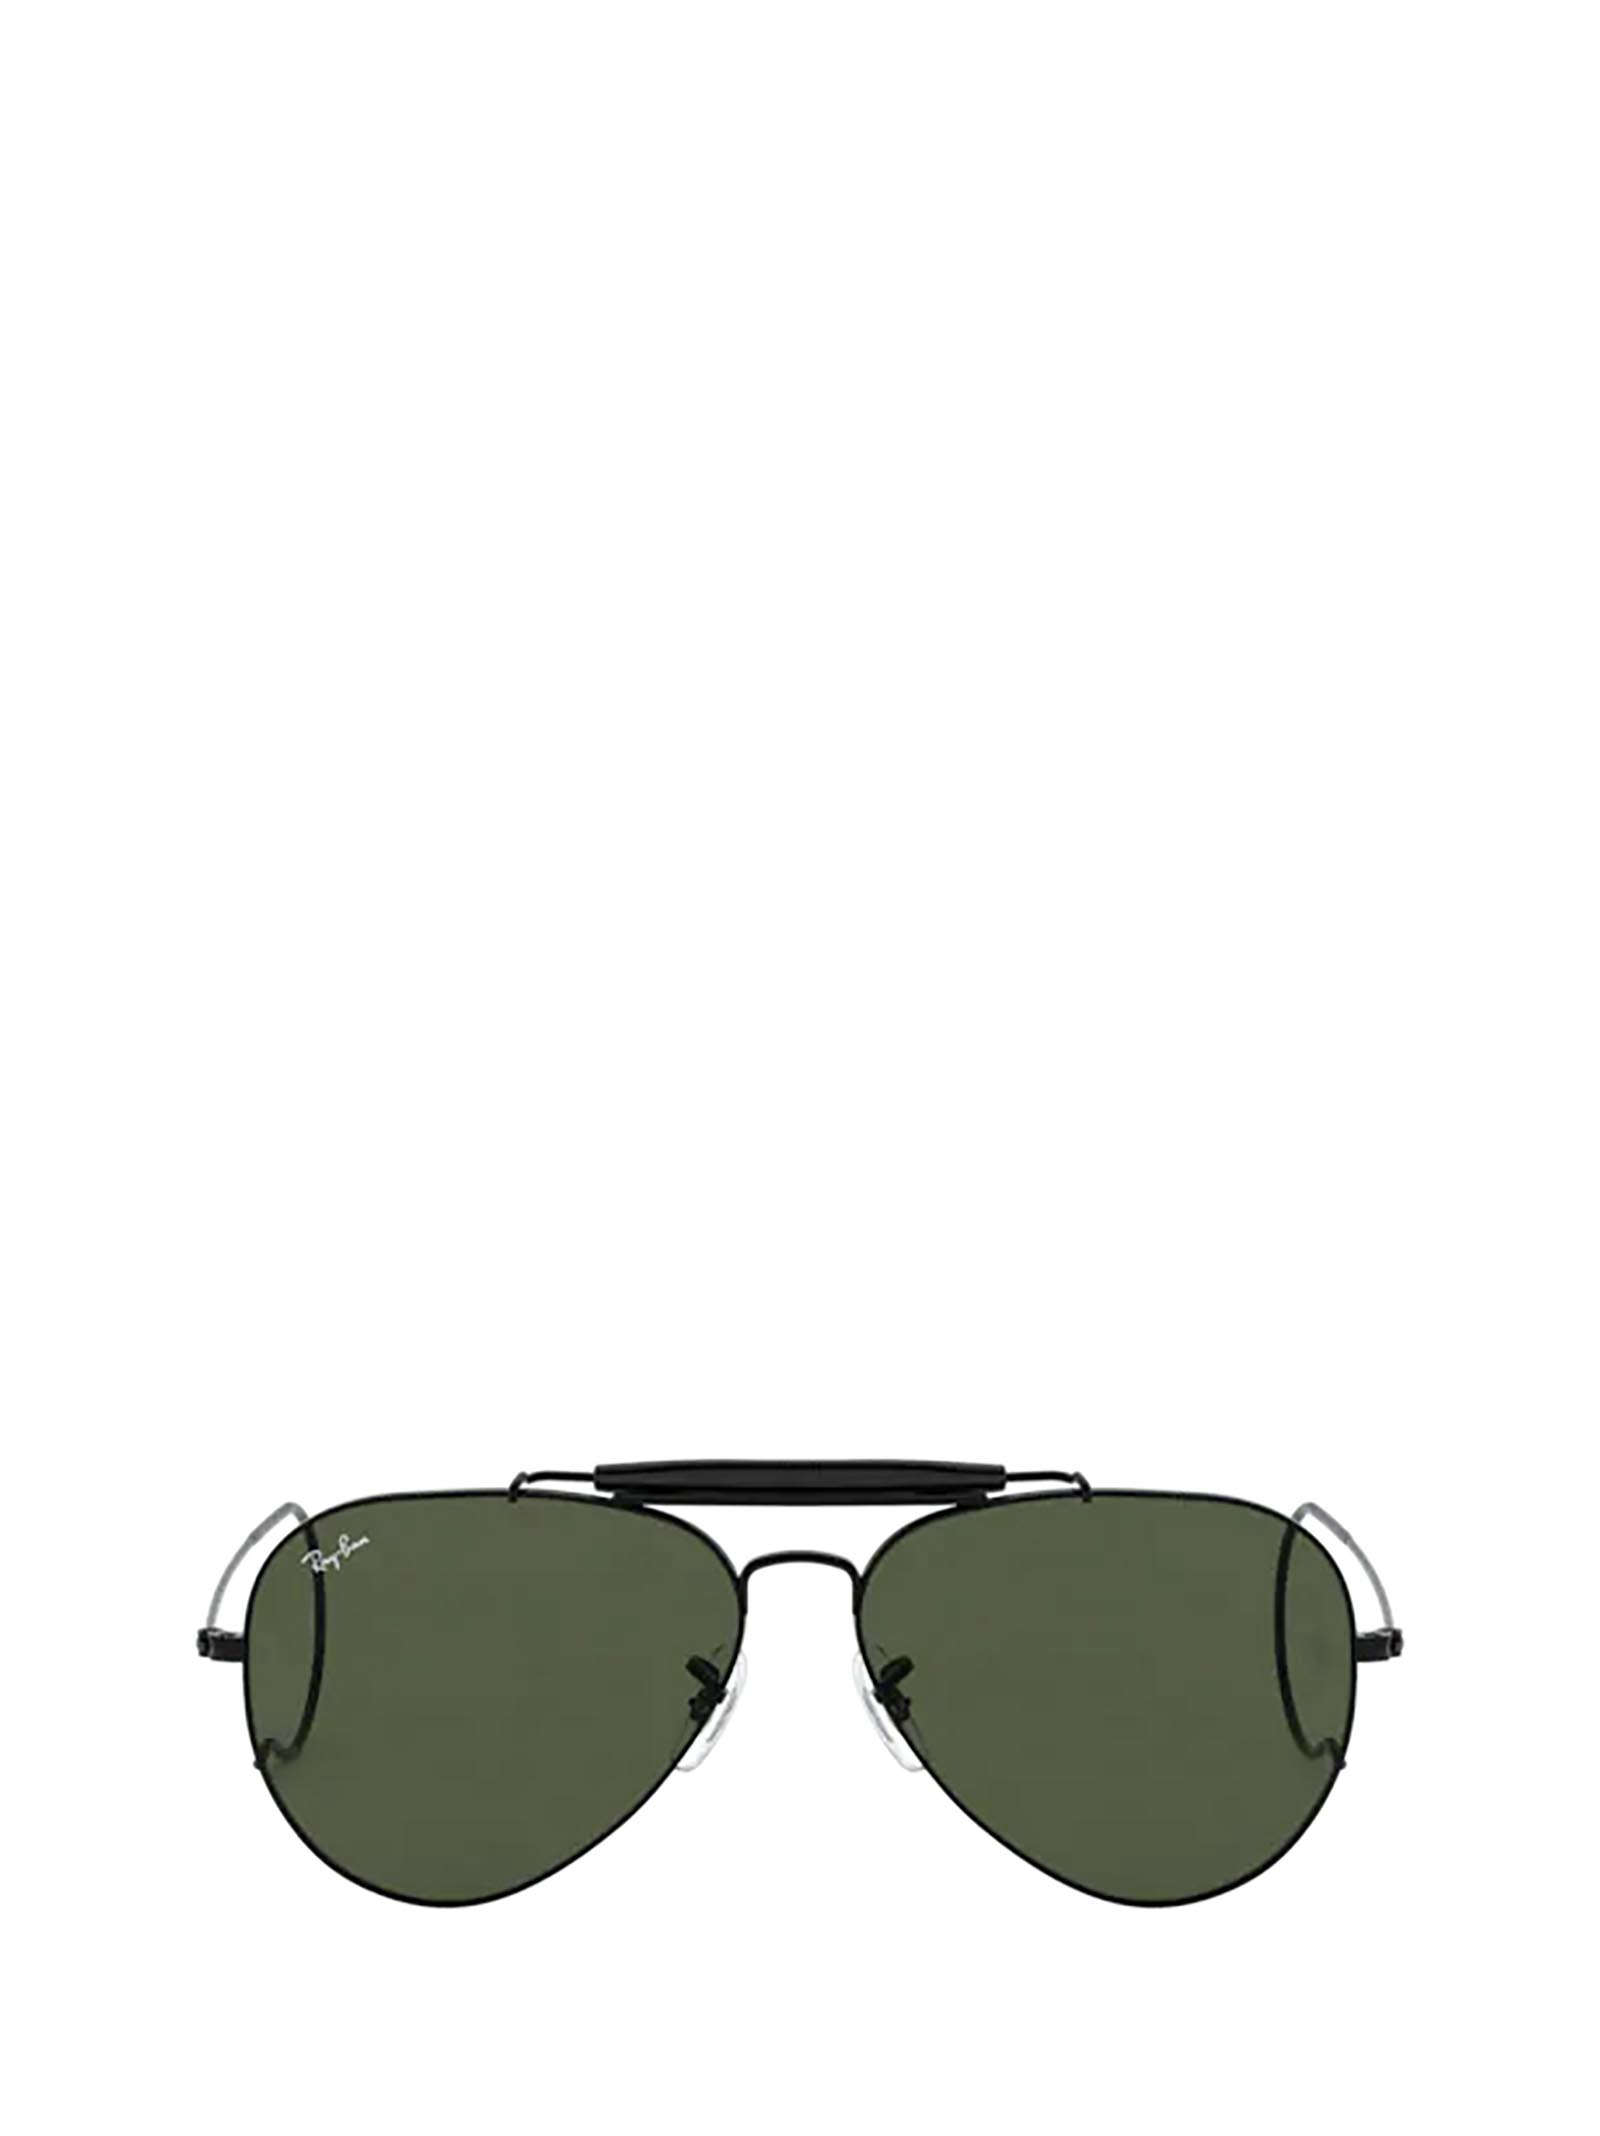 Ray Ban Ray-ban Rb3030 Black Sunglasses